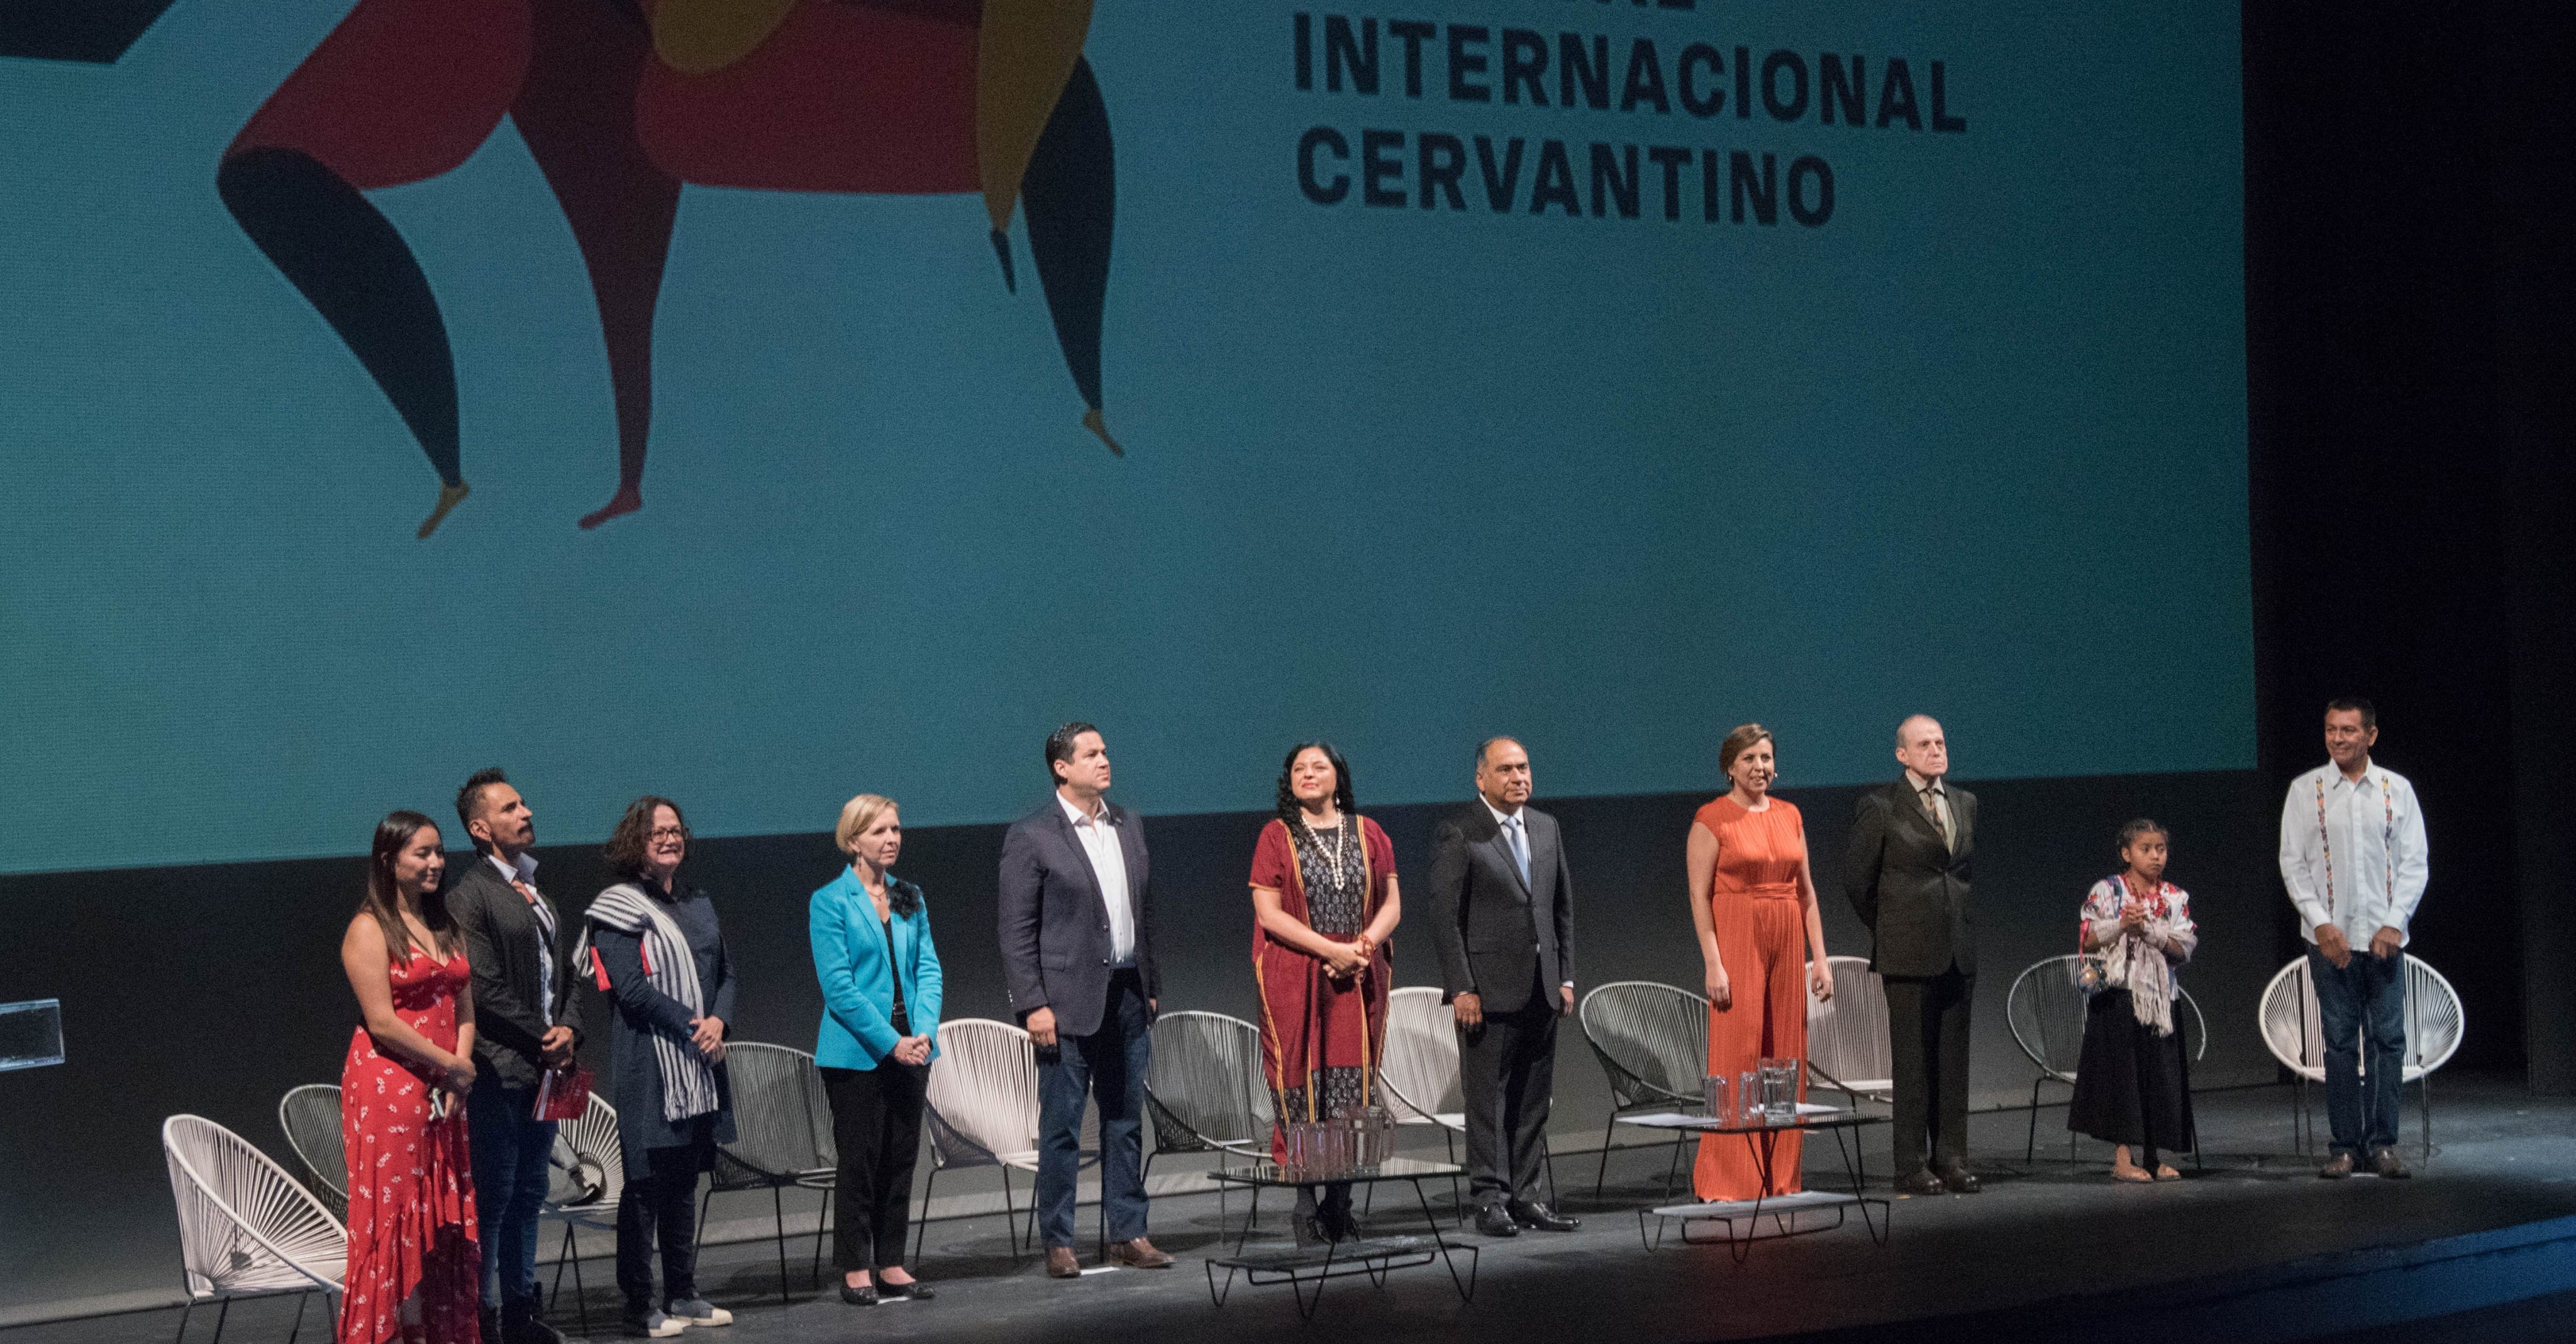 Migraciones, el tema eje del Festival Internacional Cervantino